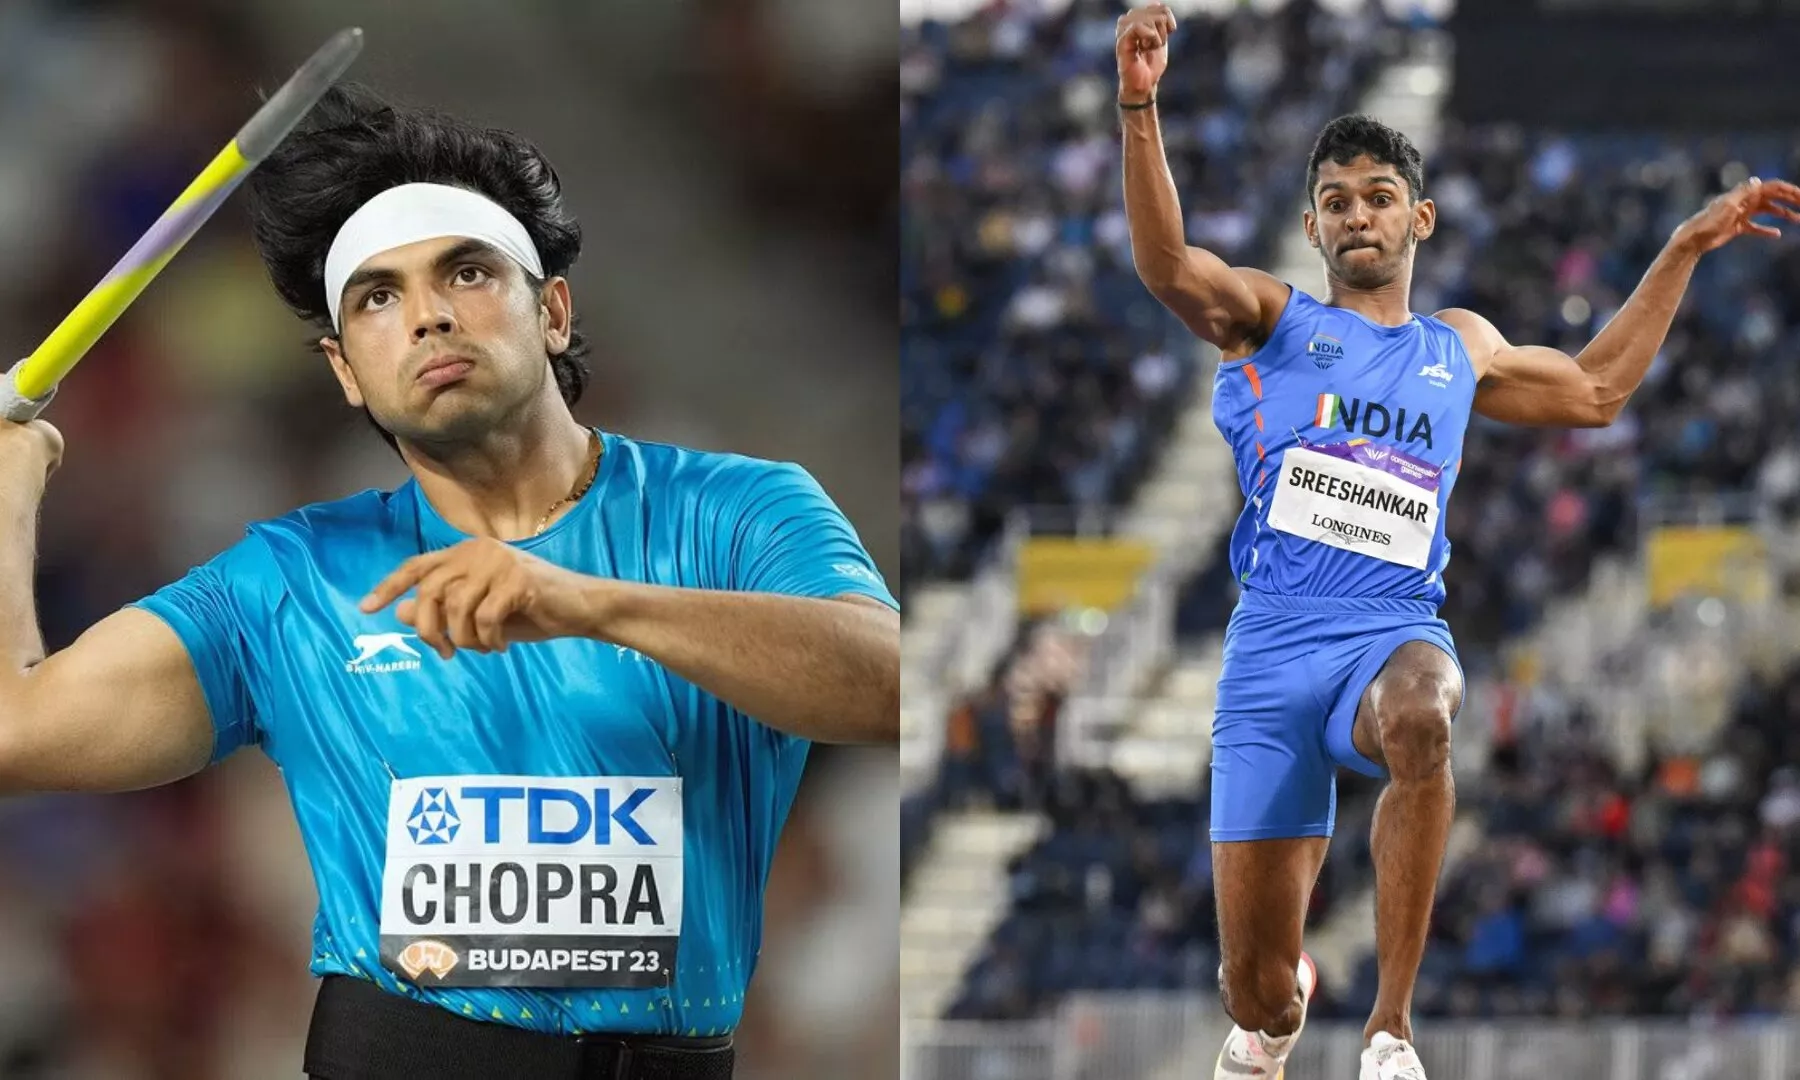 Zurich Diamond League 2023 Neeraj Chopra and Murali Sreeshankar Fifteen Indian athletes till date September 6th have qualified for the Paris Olympics 2024 including Neeraj Chopra.